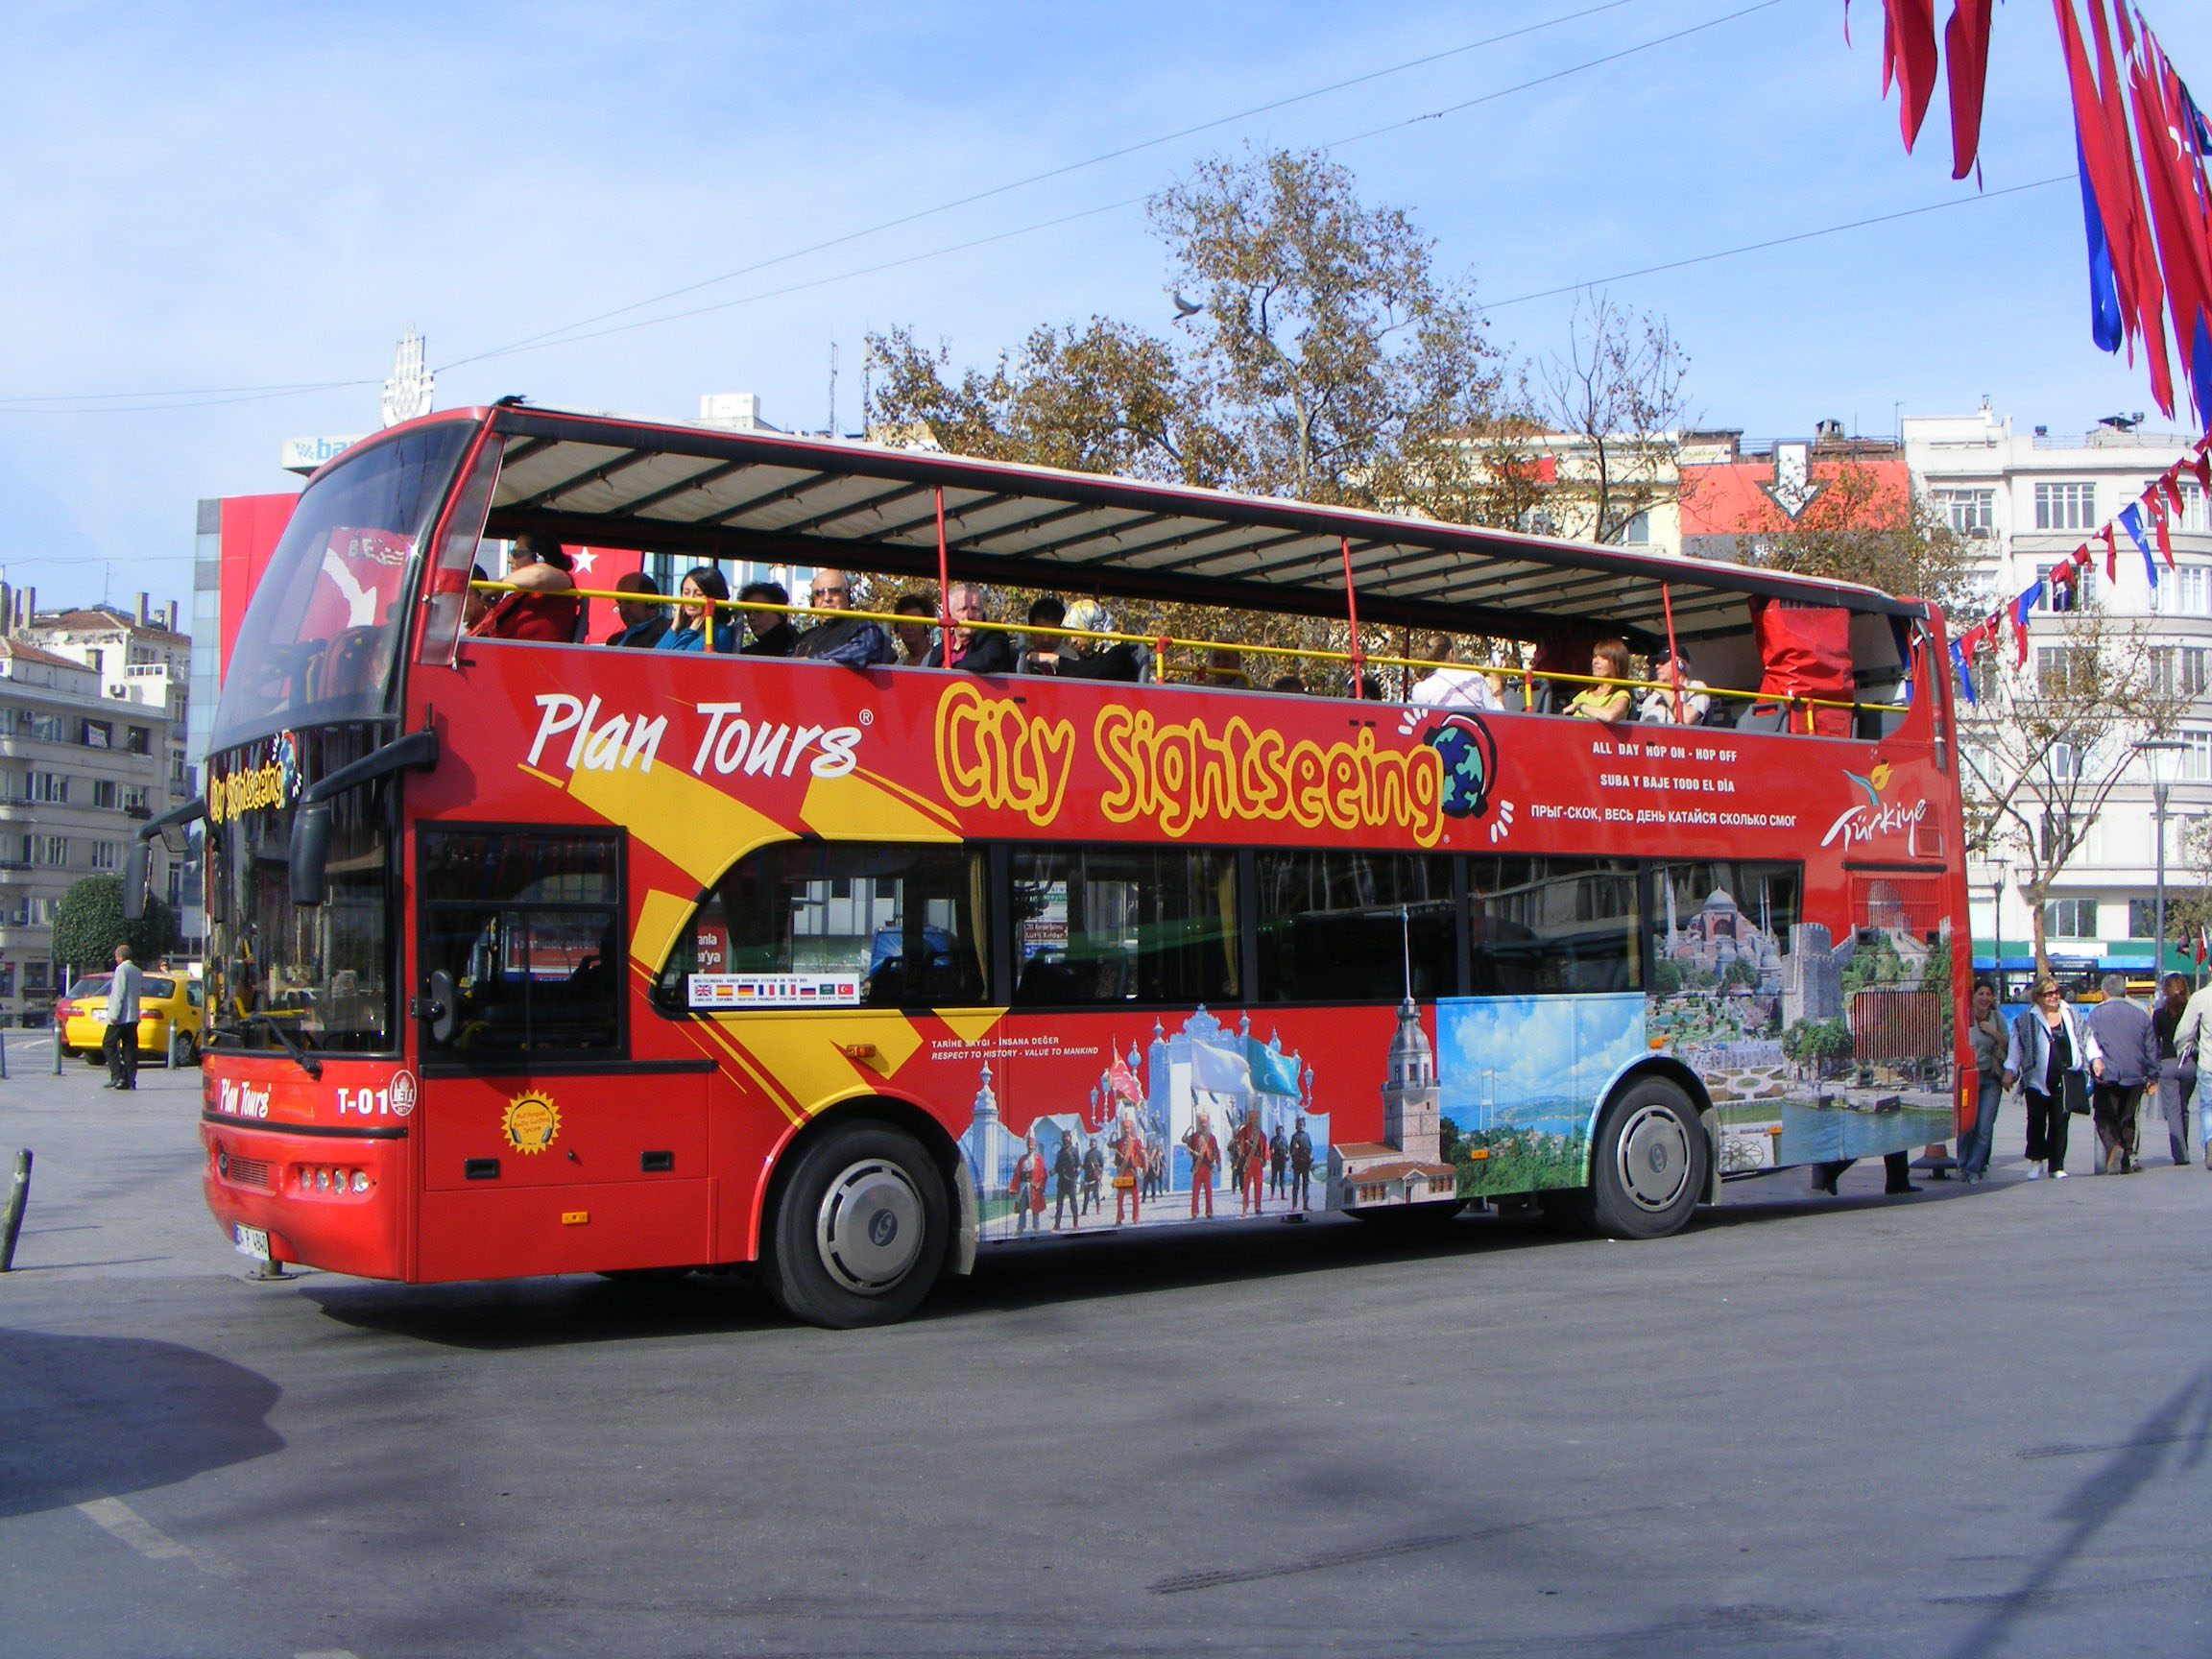 istanbul city tour bus price